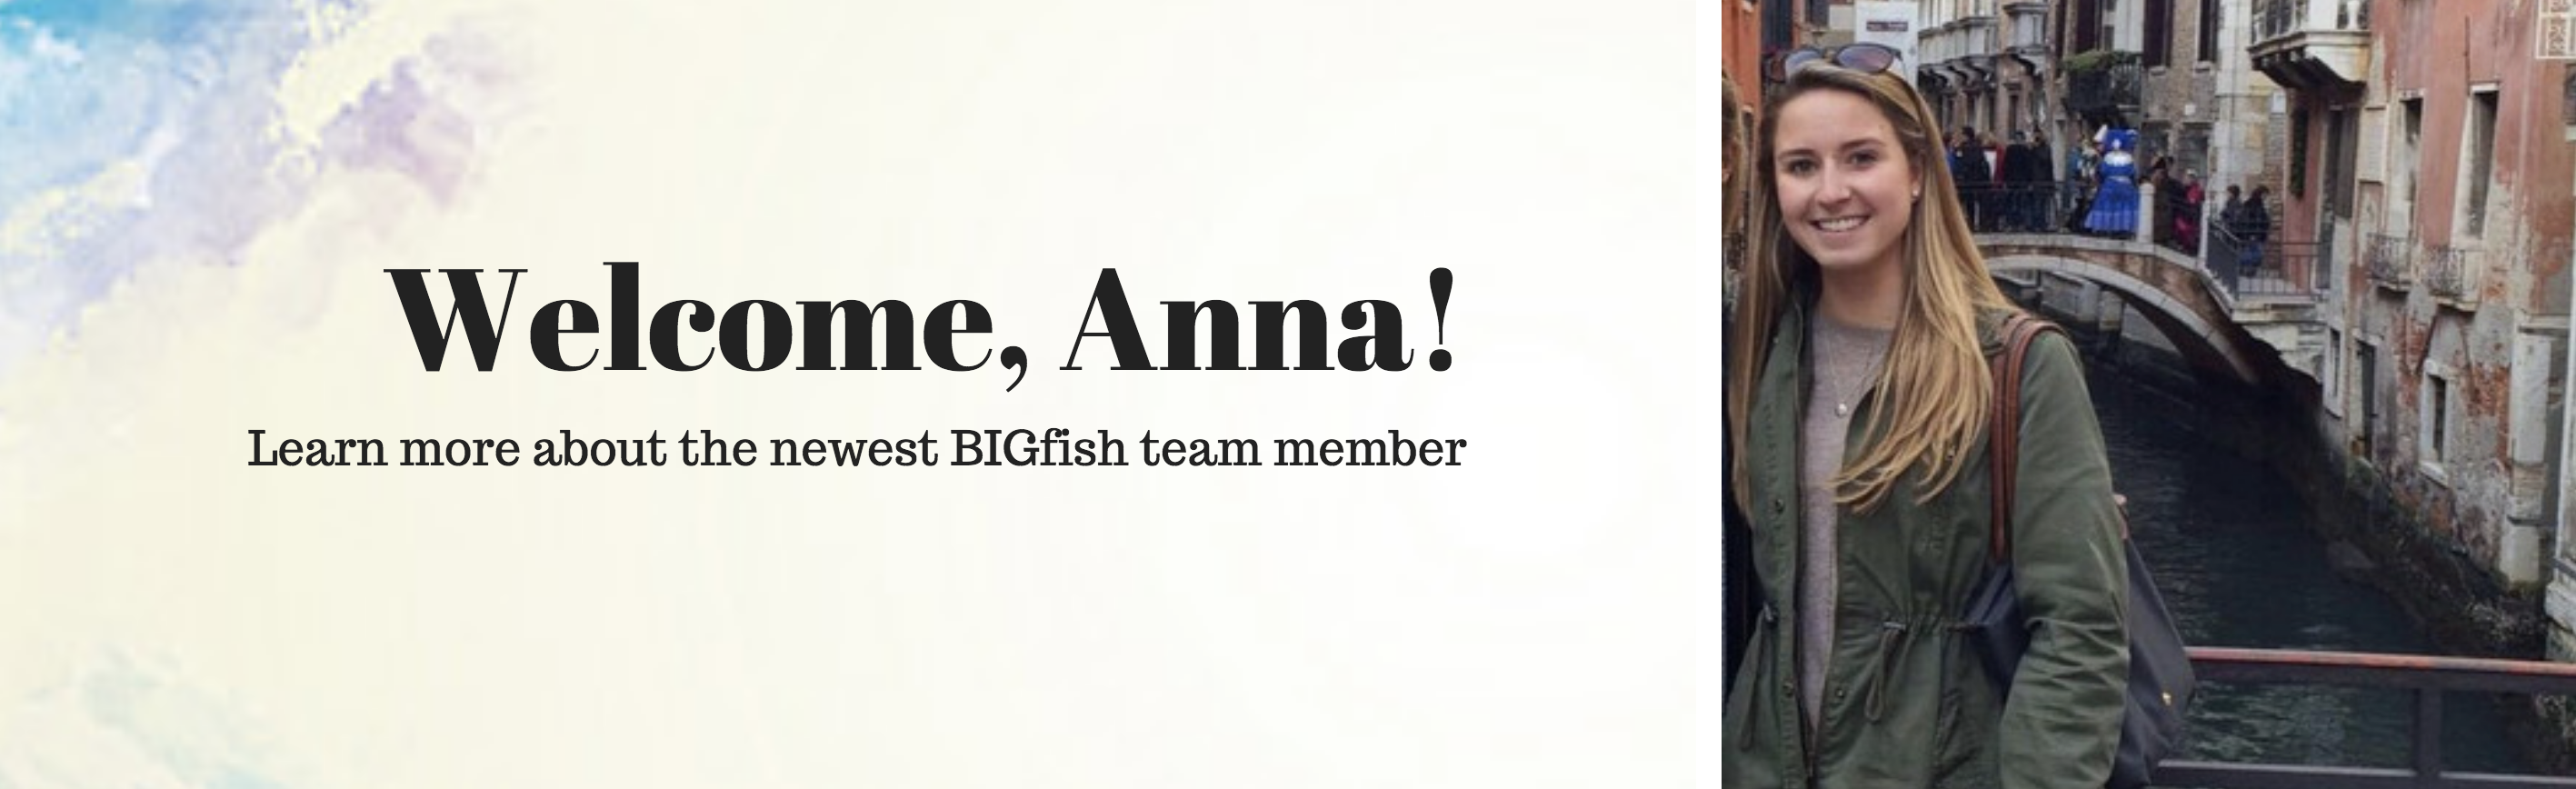 Meet Our New Team Member, Anna!